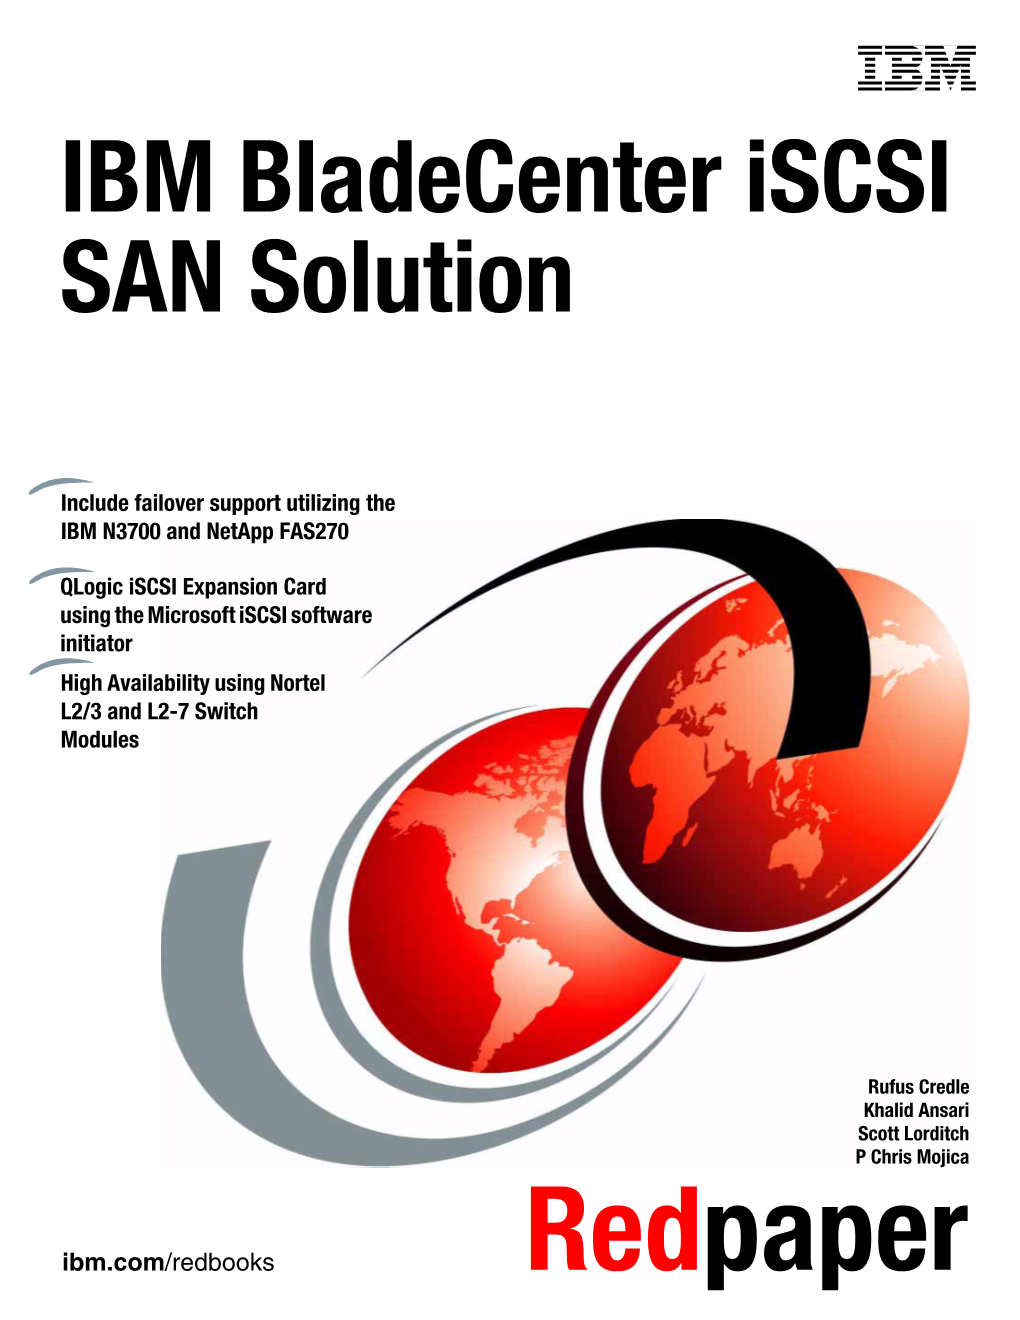 IBM Bladecenter Iscsi SAN Solution